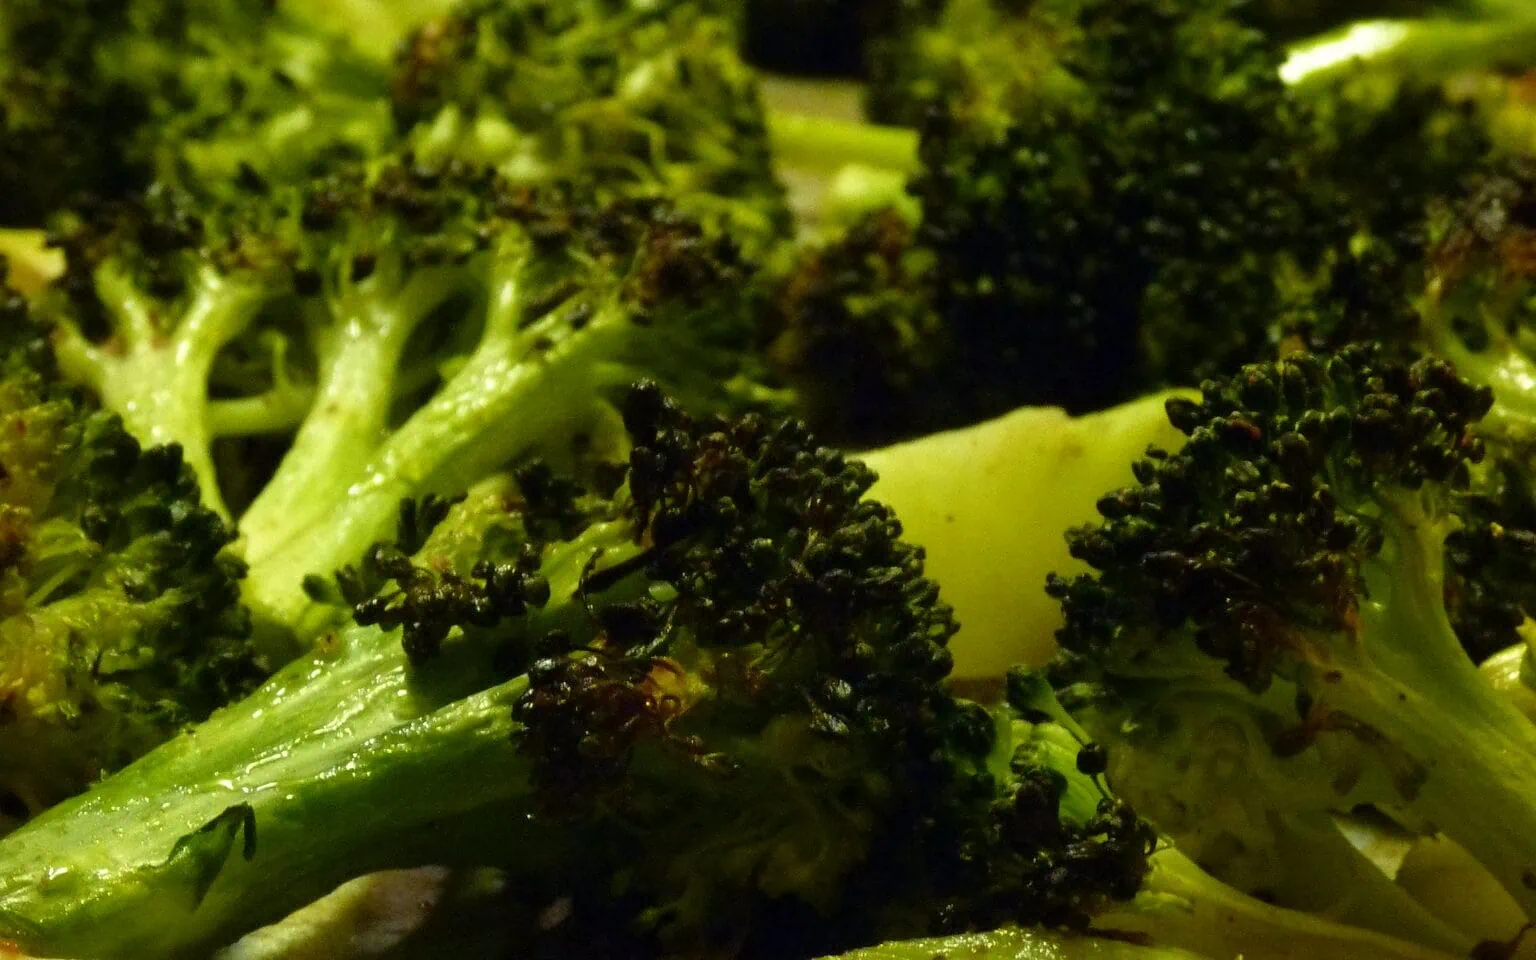 Mixture of broccoli